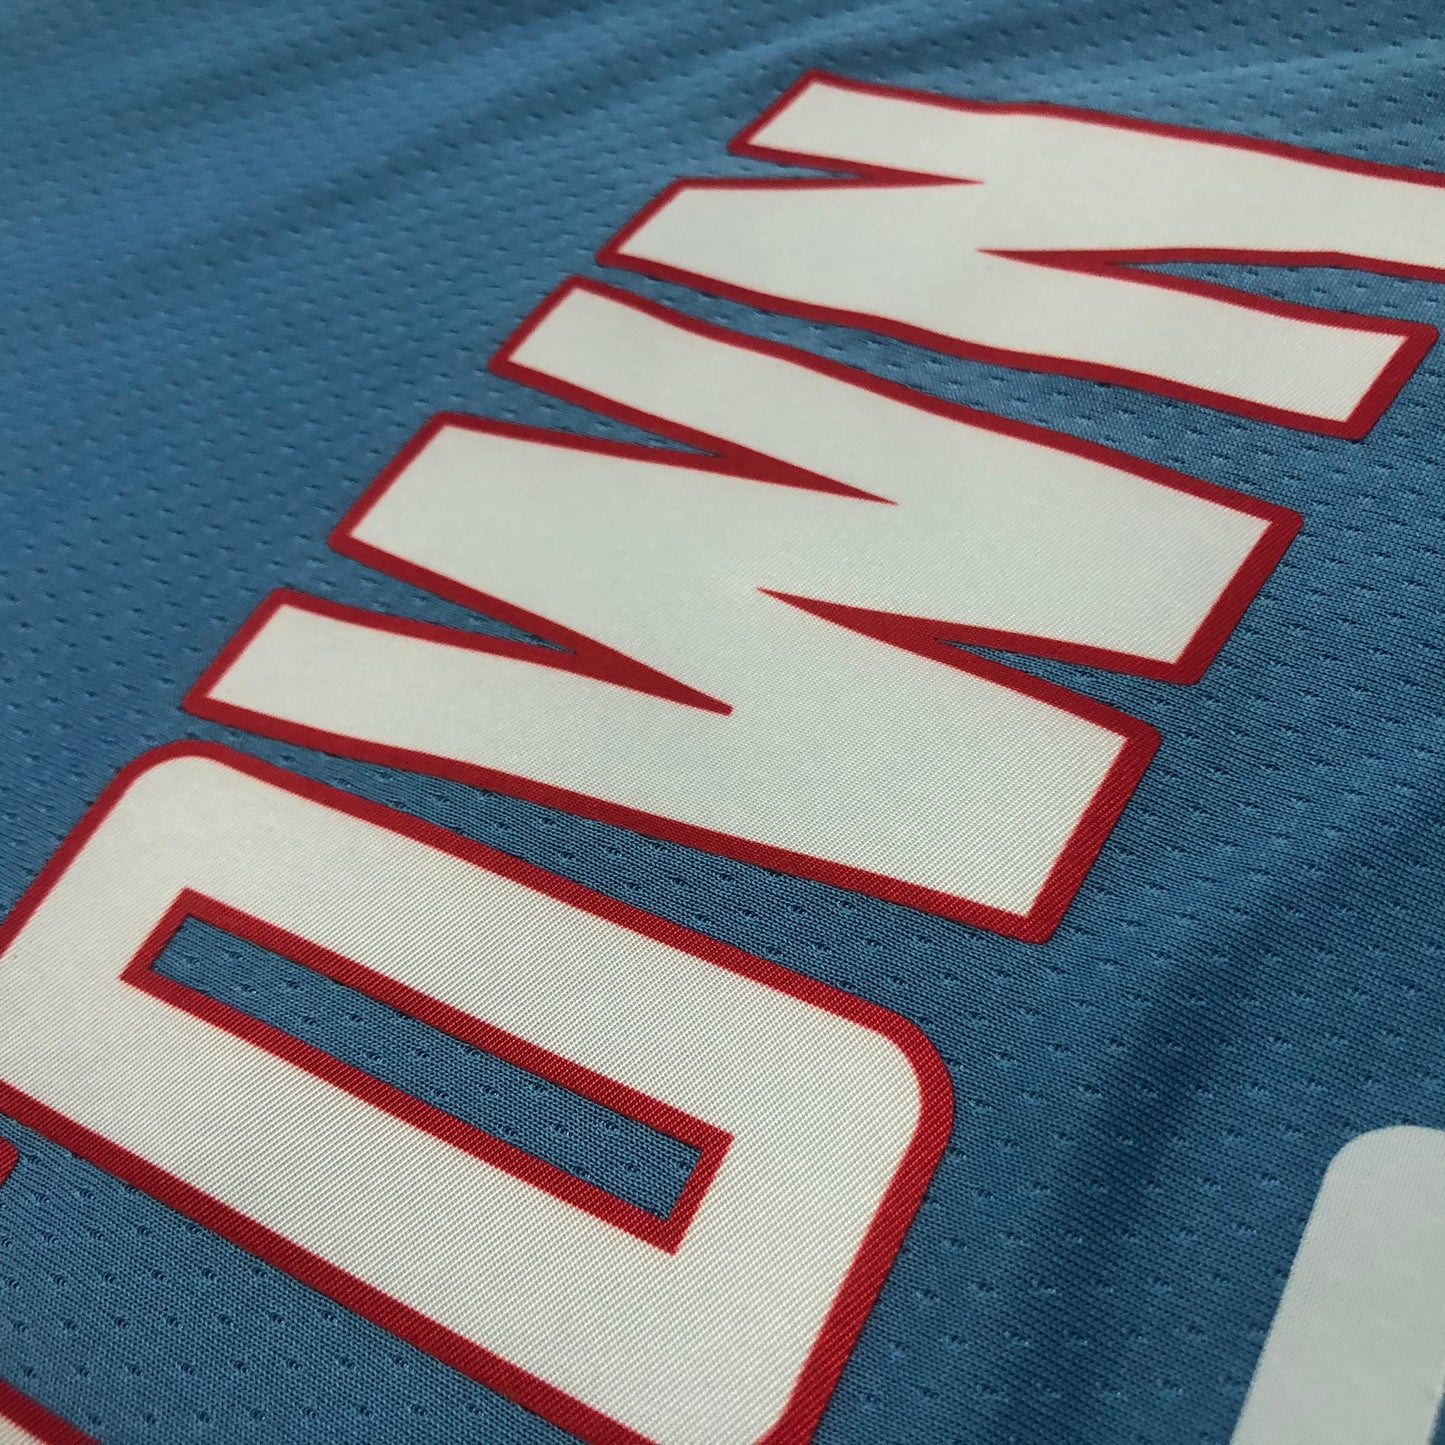 Houston Rockets James Harden 2020/21 ‘H Town’ Nike City Edition Baby Blue NBA Swingman Jersey